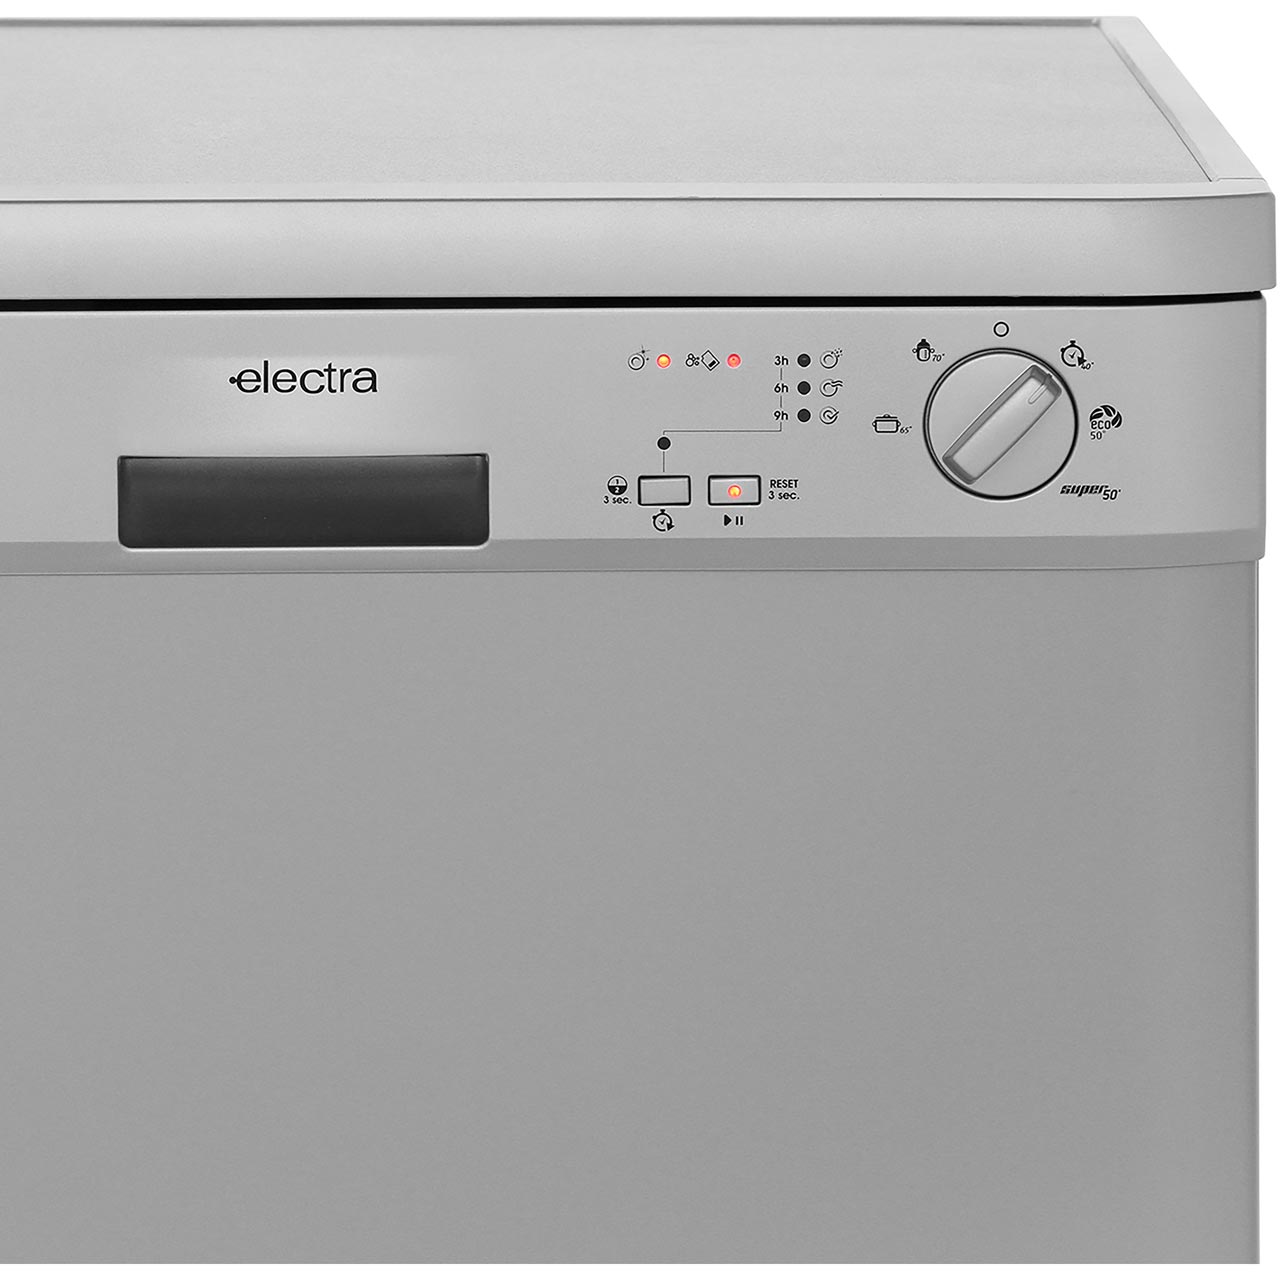 electra dishwasher review